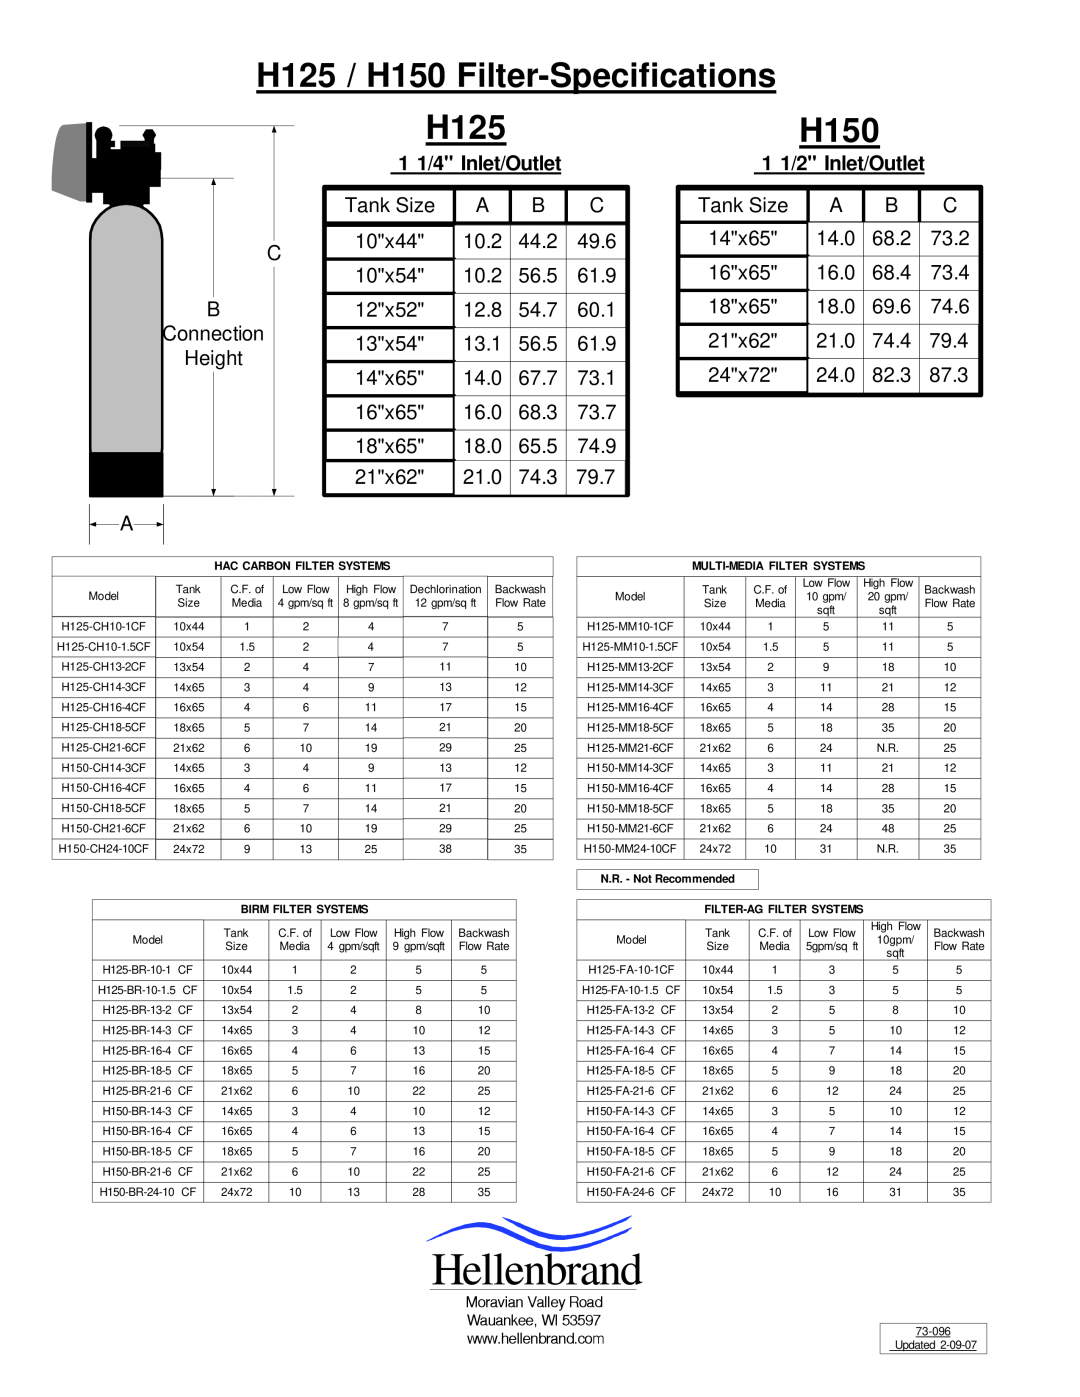 Hellenbrand H125 Series manual 1 1/4 Inlet/Outlet, 1 1/2 Inlet/Outlet, Hellenbrand, H125 / H150 Filter-Specifications 